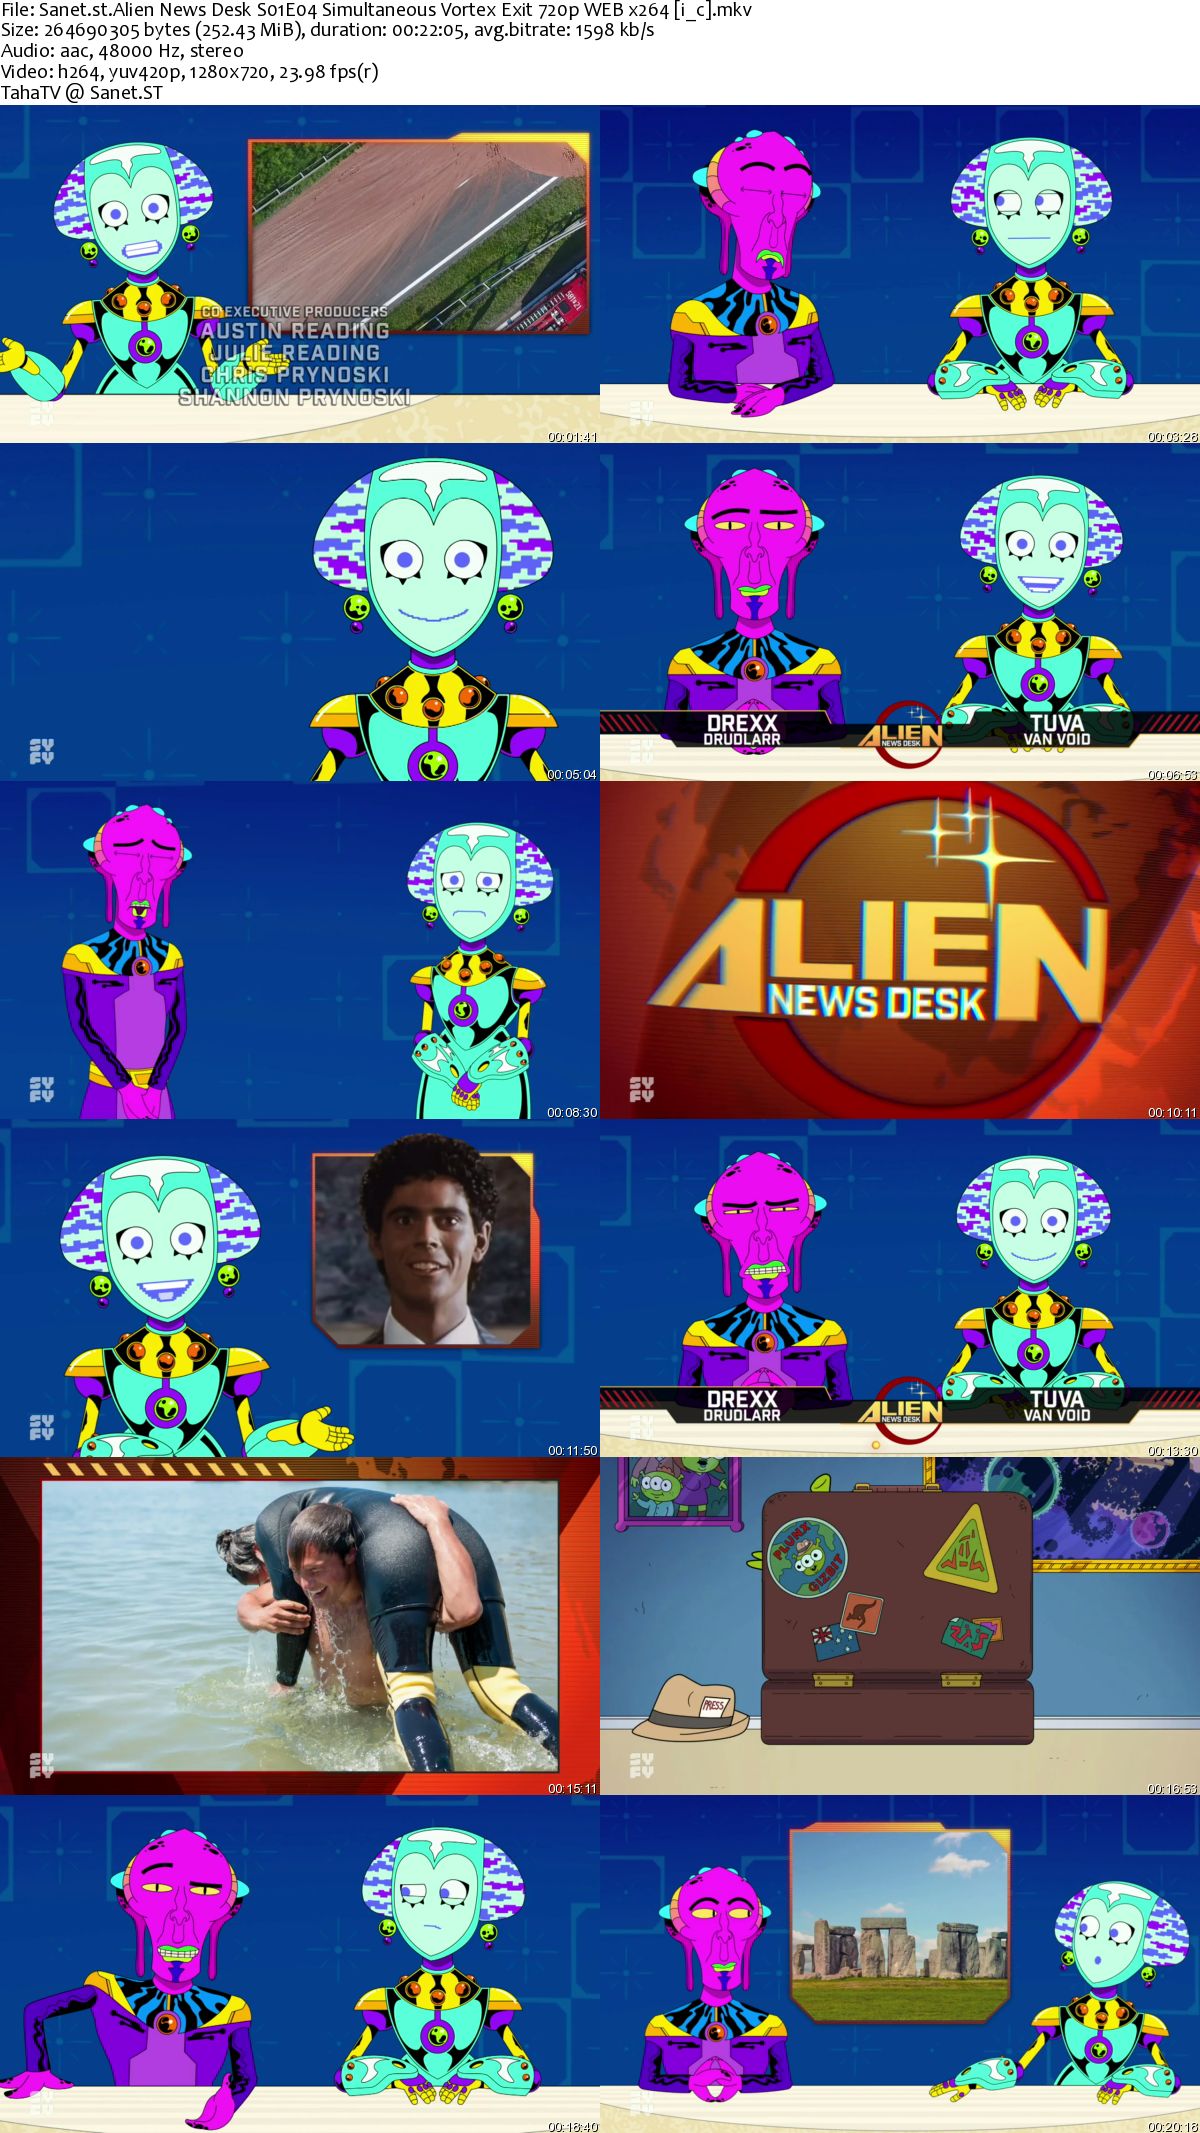 alien news desk imdb